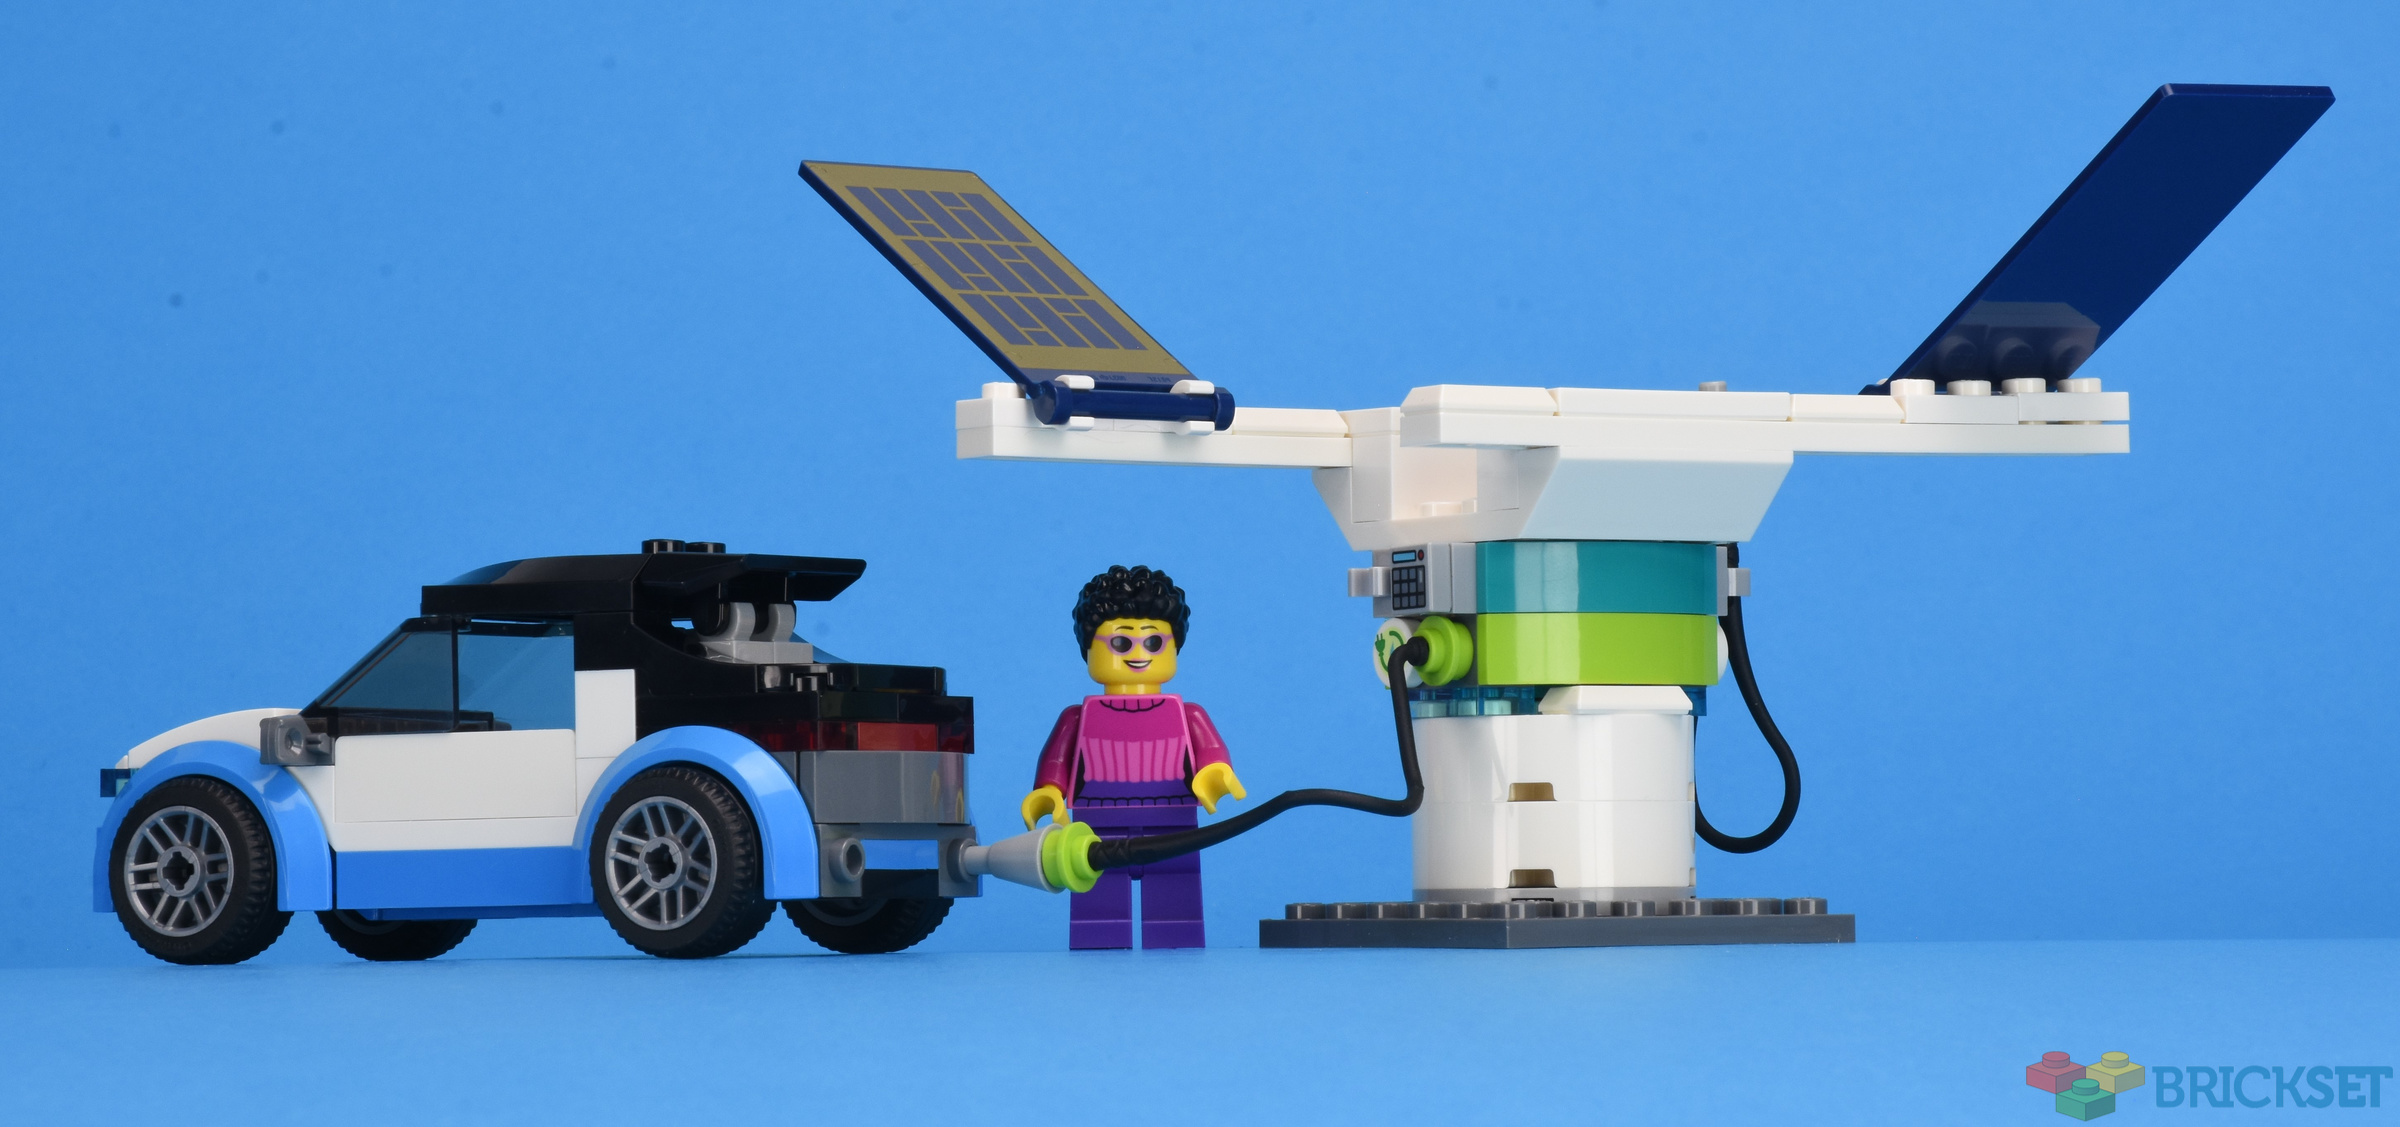 Best Buy: LEGO City Freight Train 60336 6385809